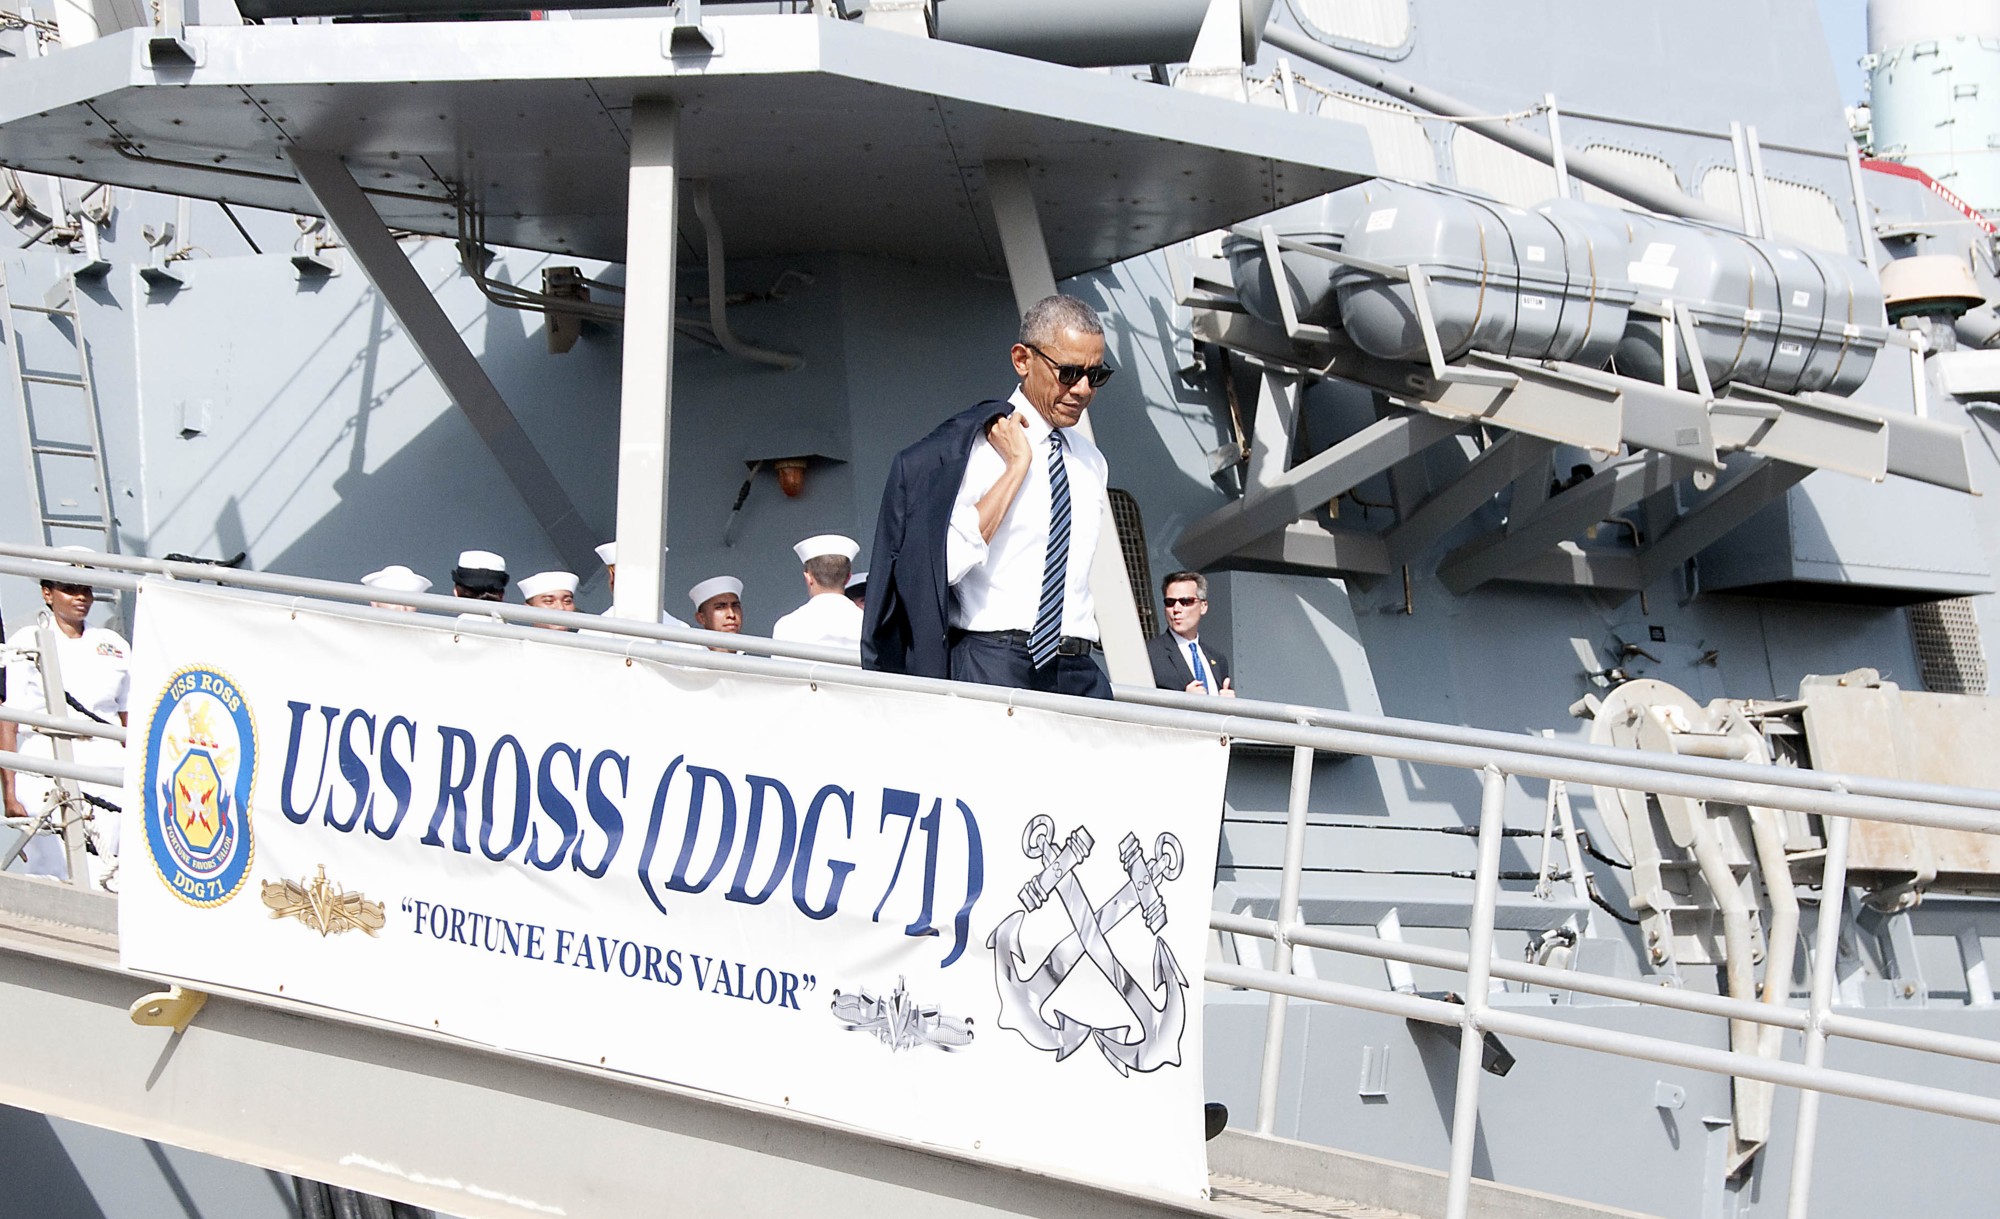 ddg-71 uss ross guided missile destroyer arleigh burke class aegis bmd 43 president barack obama visit